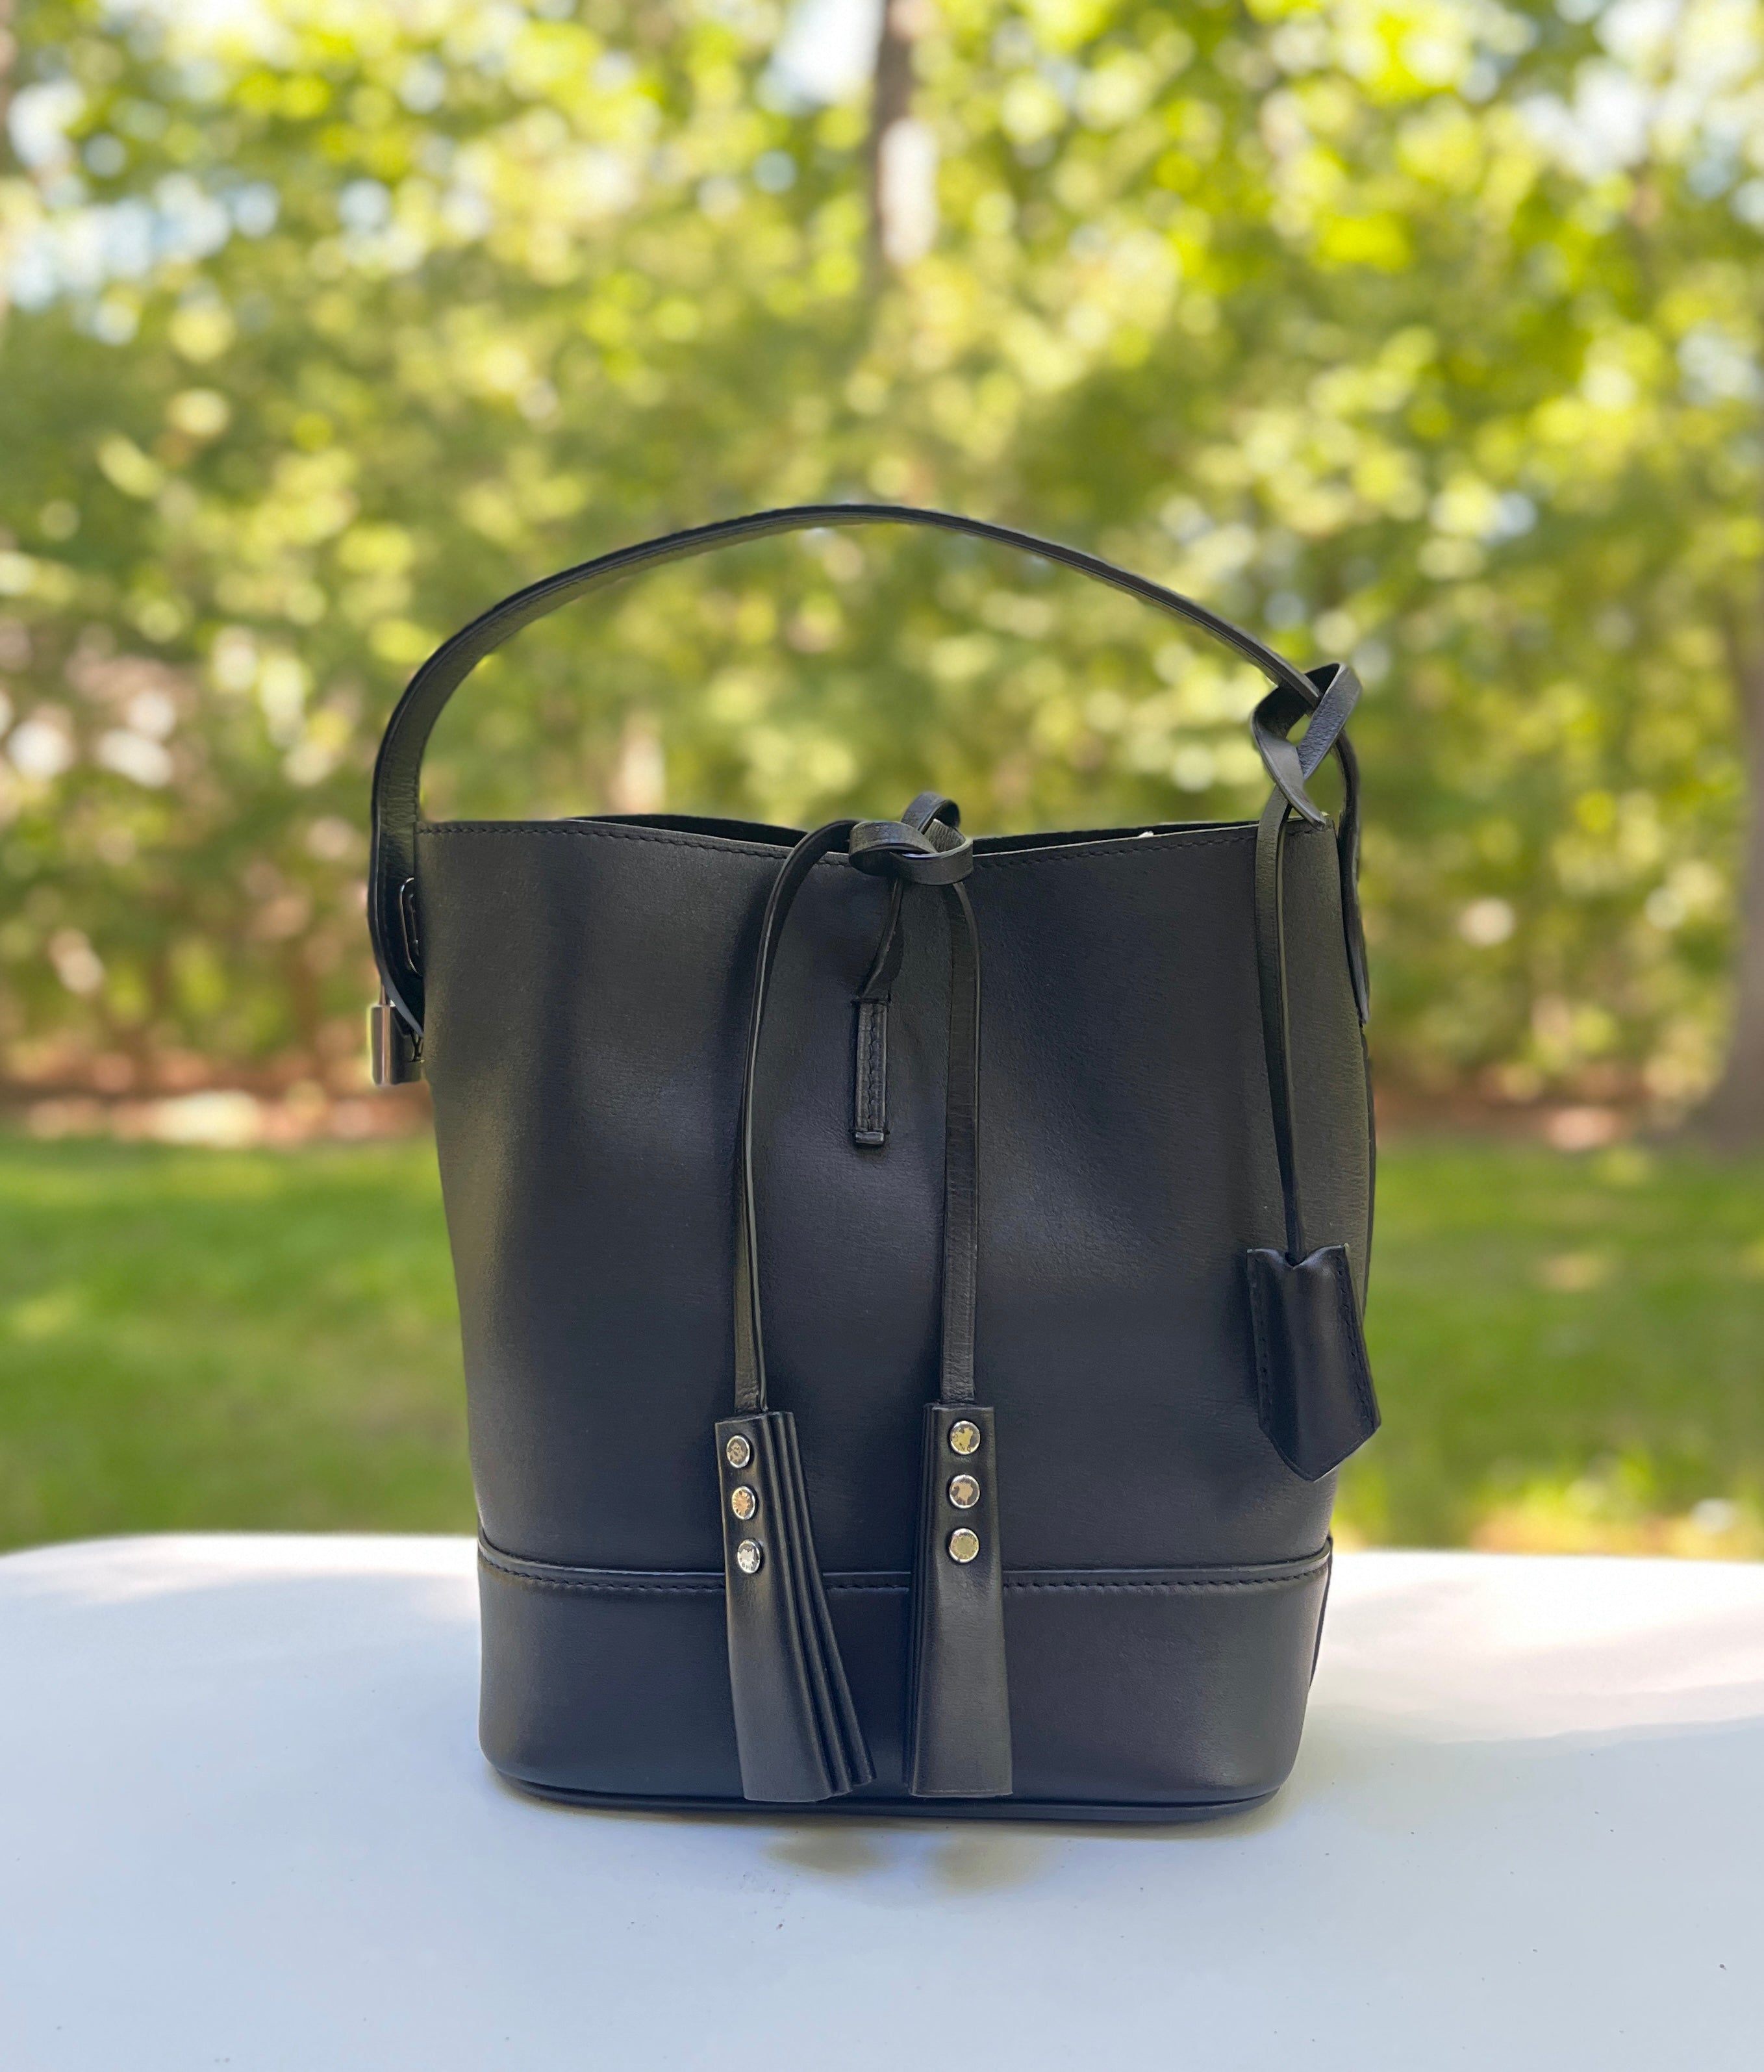 Louis Vuitton EPI Leather Crafty Twist Mini in Canelle